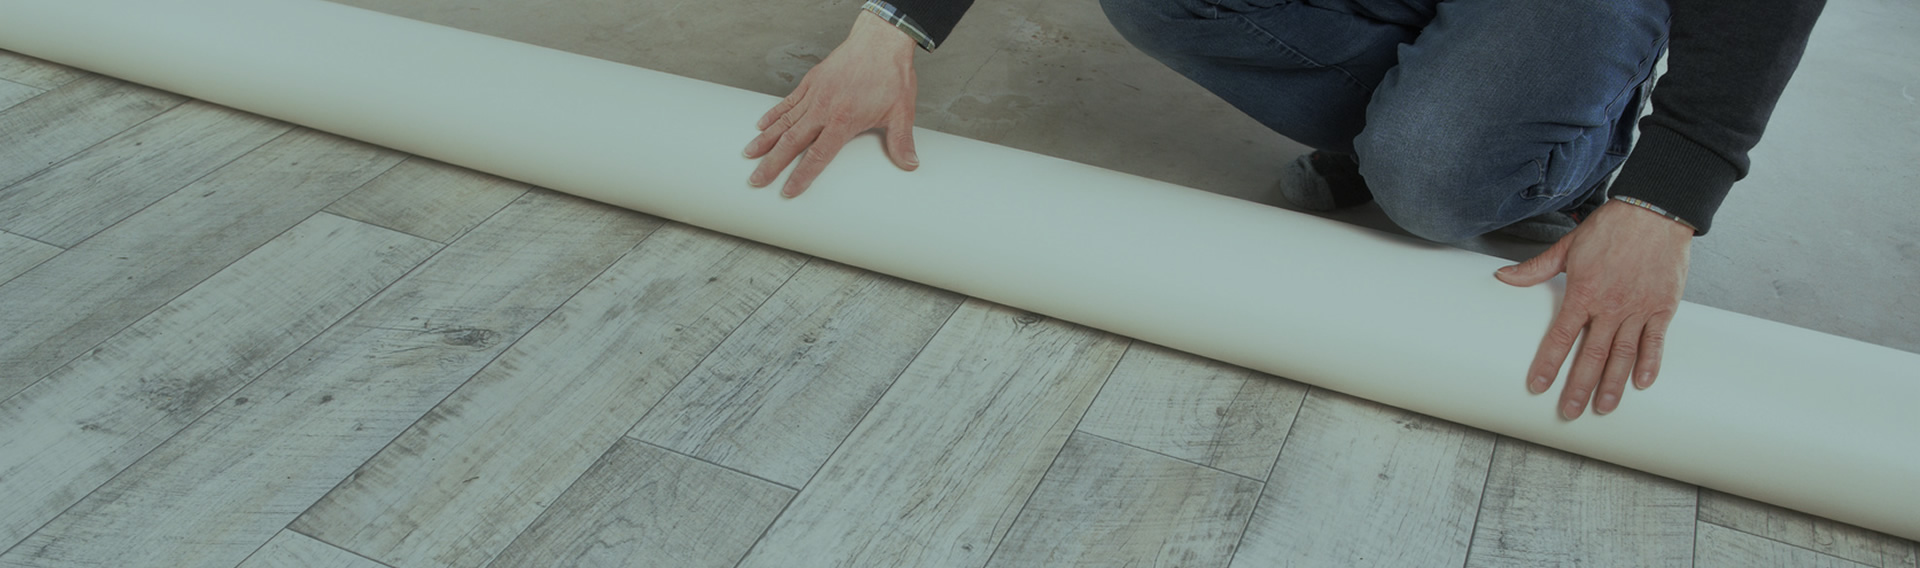 Fußbodenverlegung mit PVC-Bodenbelag, Laminat oder Teppich